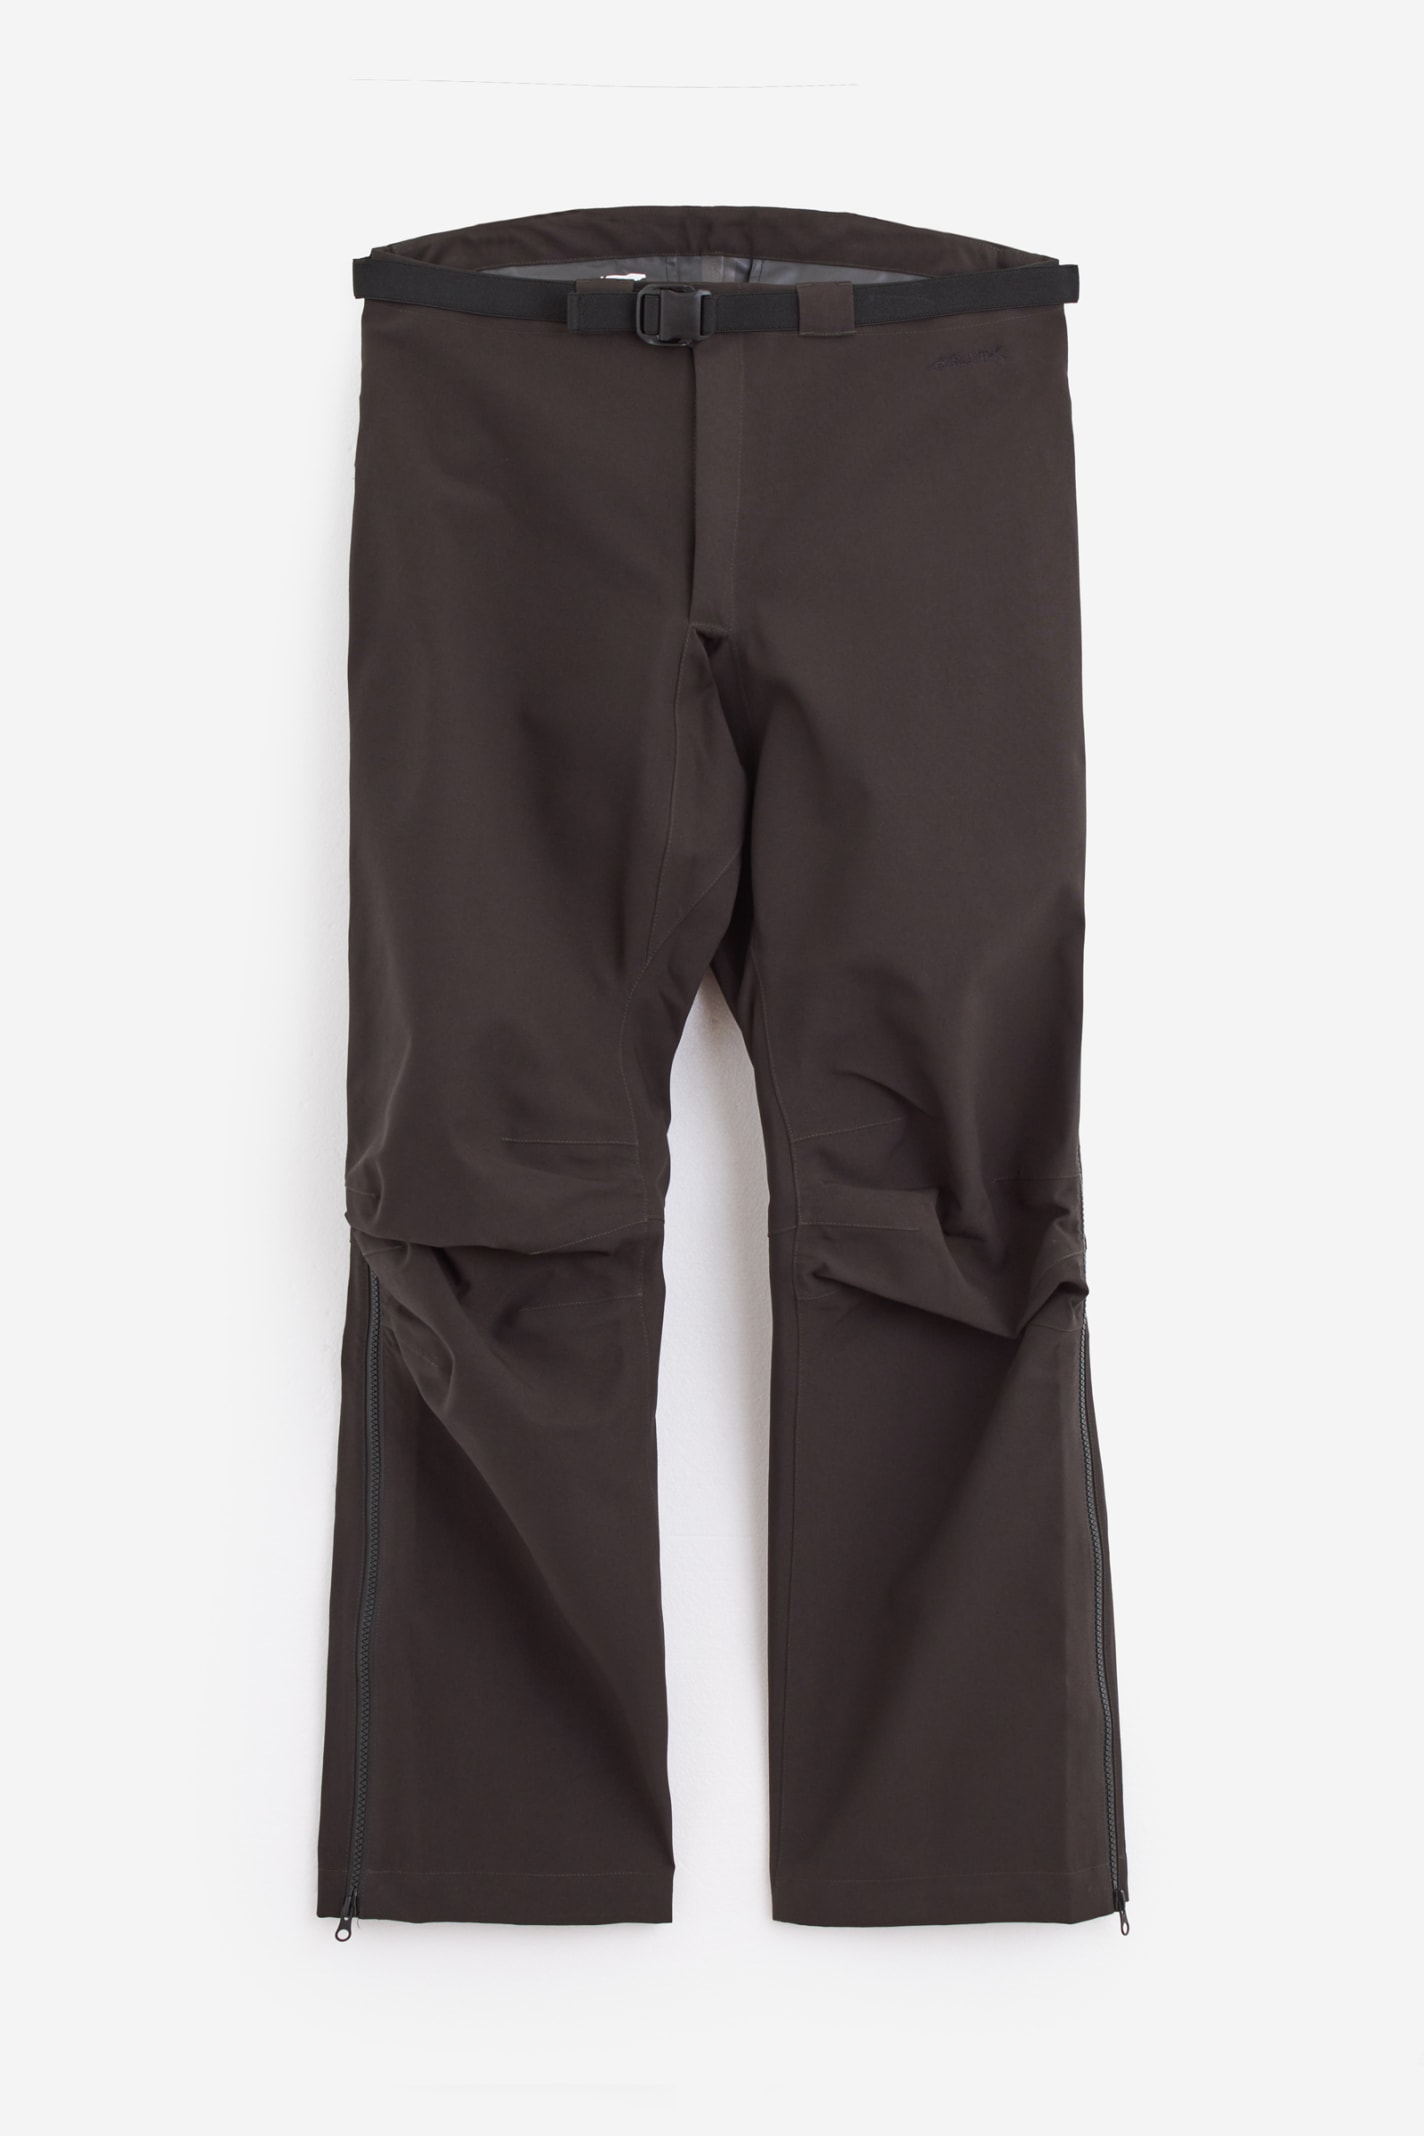 Gr10k Bembecula Arc Pants Pants In Grey